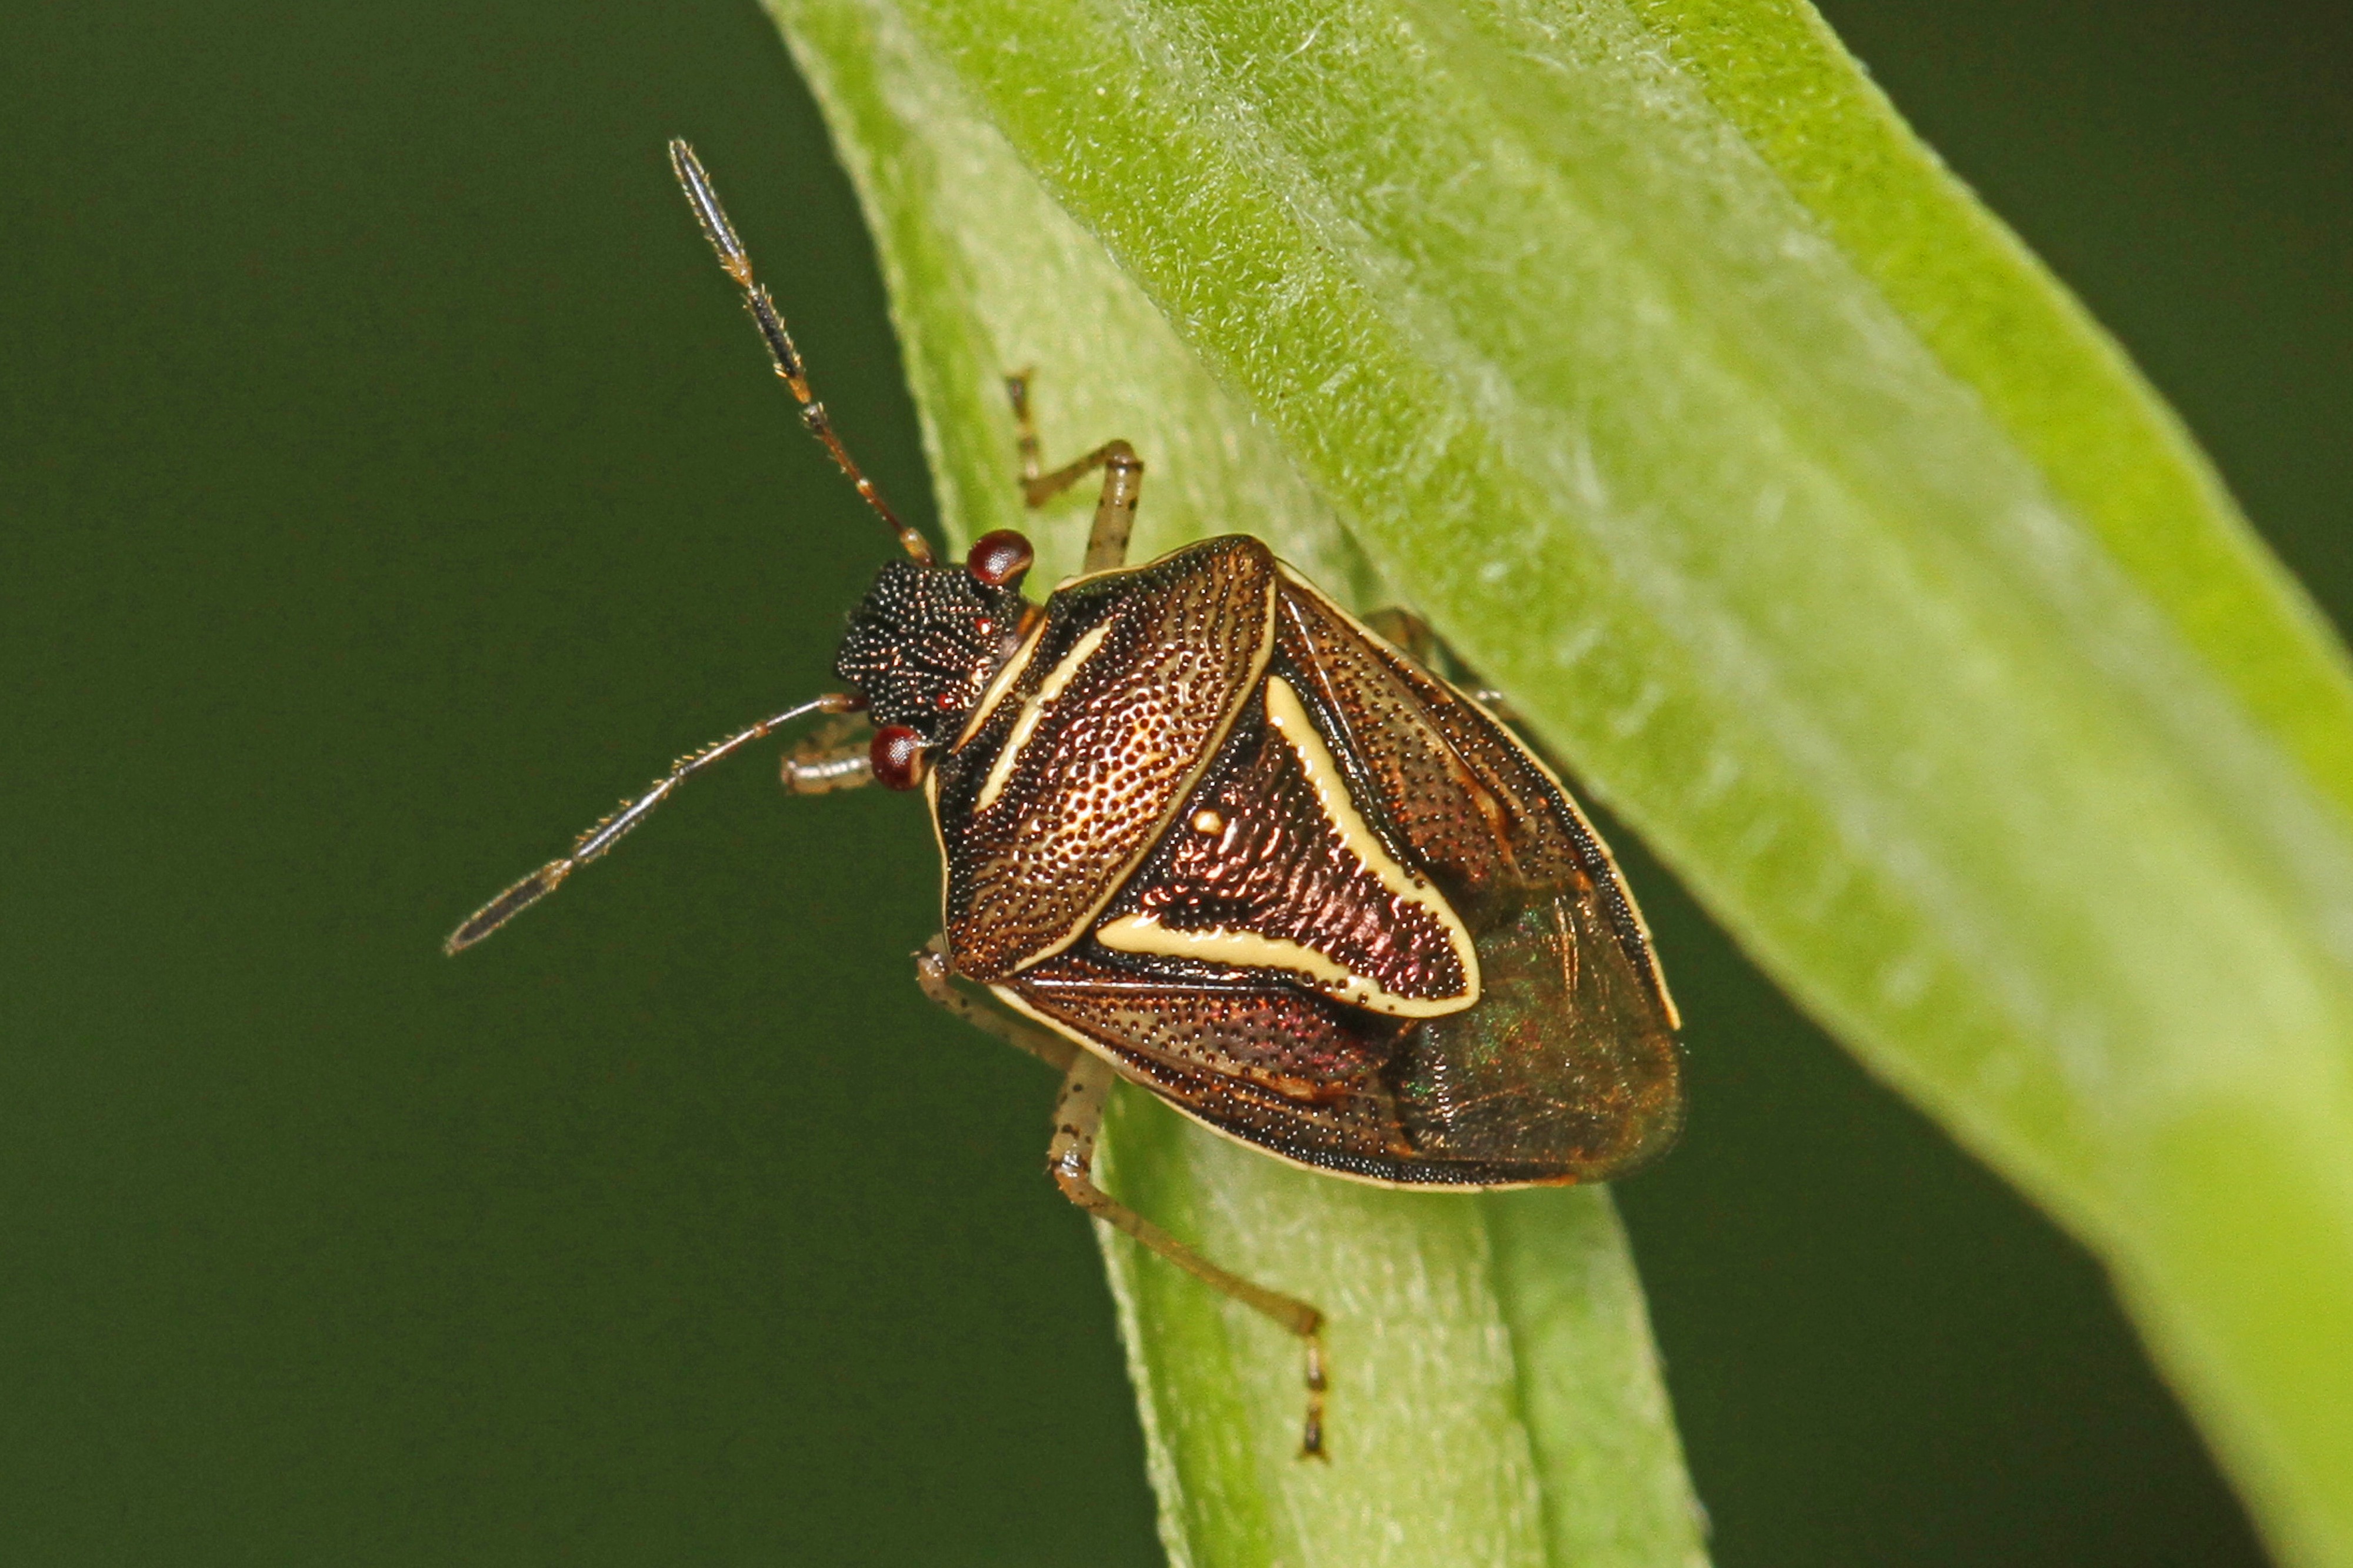 Stink Bug - Mormidea lugens, Chubb Sandhill Natural Area Preserve, Sussex County, Virginia